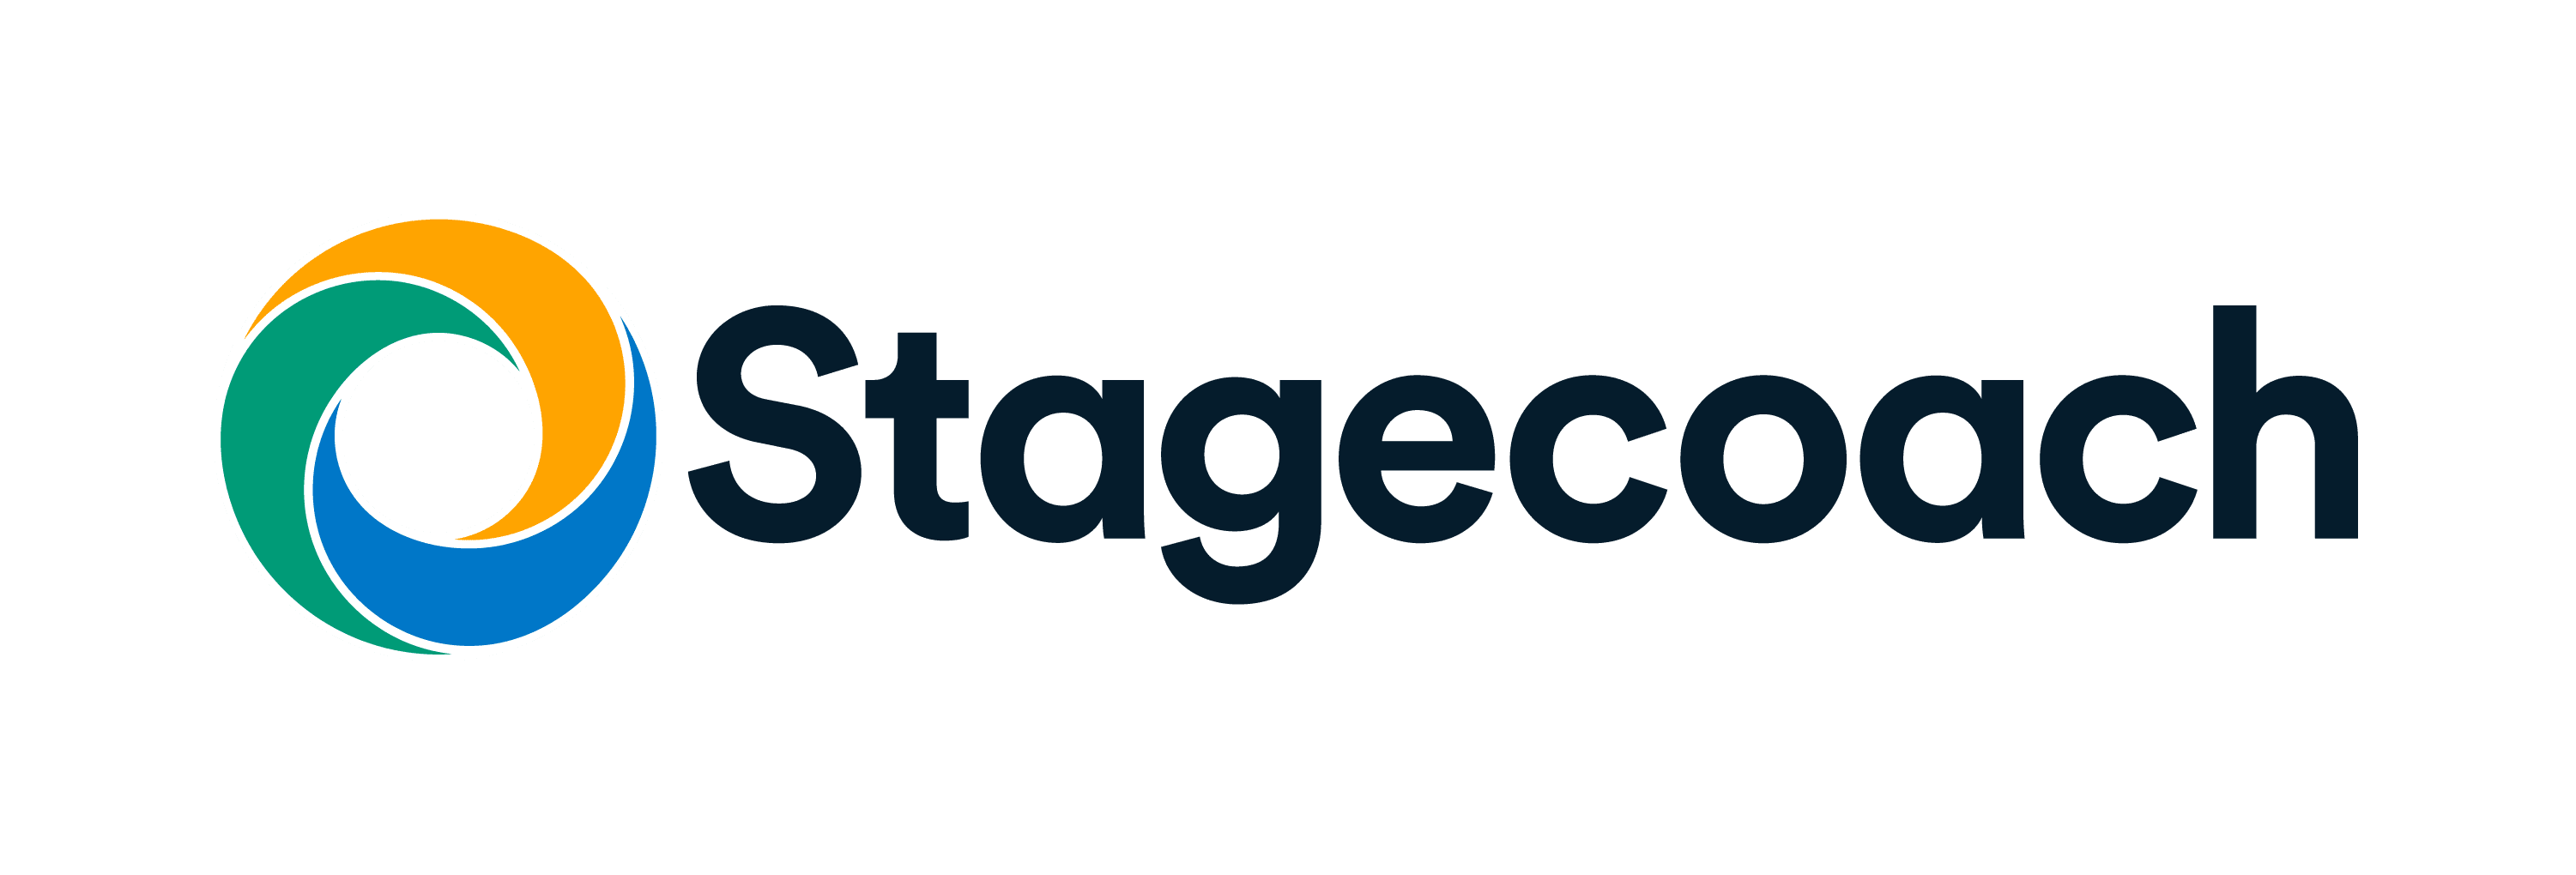 gloucestershire nightstop | STAGECOACH MASTER RGB SLATE PNG Master Logo RGB Slate 2 1